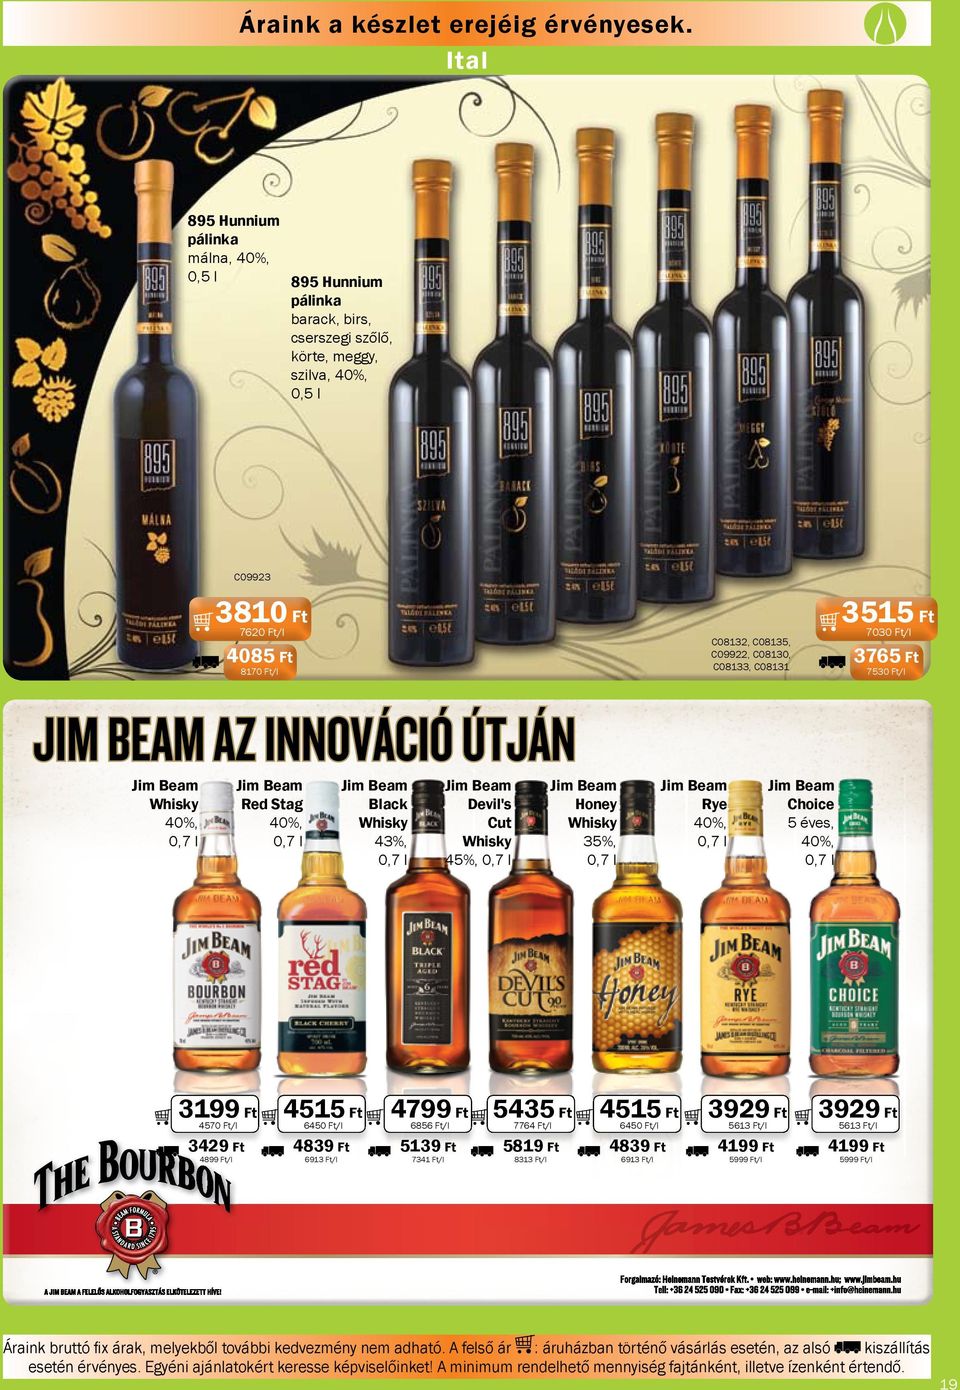 0,7 l Jim Beam Red Stag 40%, 0,7 l Jim Beam Black Whisky 43%, 0,7 l 3199 Ft 4515 Ft 3429 Ft 4839 Ft 4570 Ft/l 4899 Ft/l 7030 Ft/l C08132, C08135, C09922, C08130, C08133, C08131 6450 Ft/l 6913 Ft/l